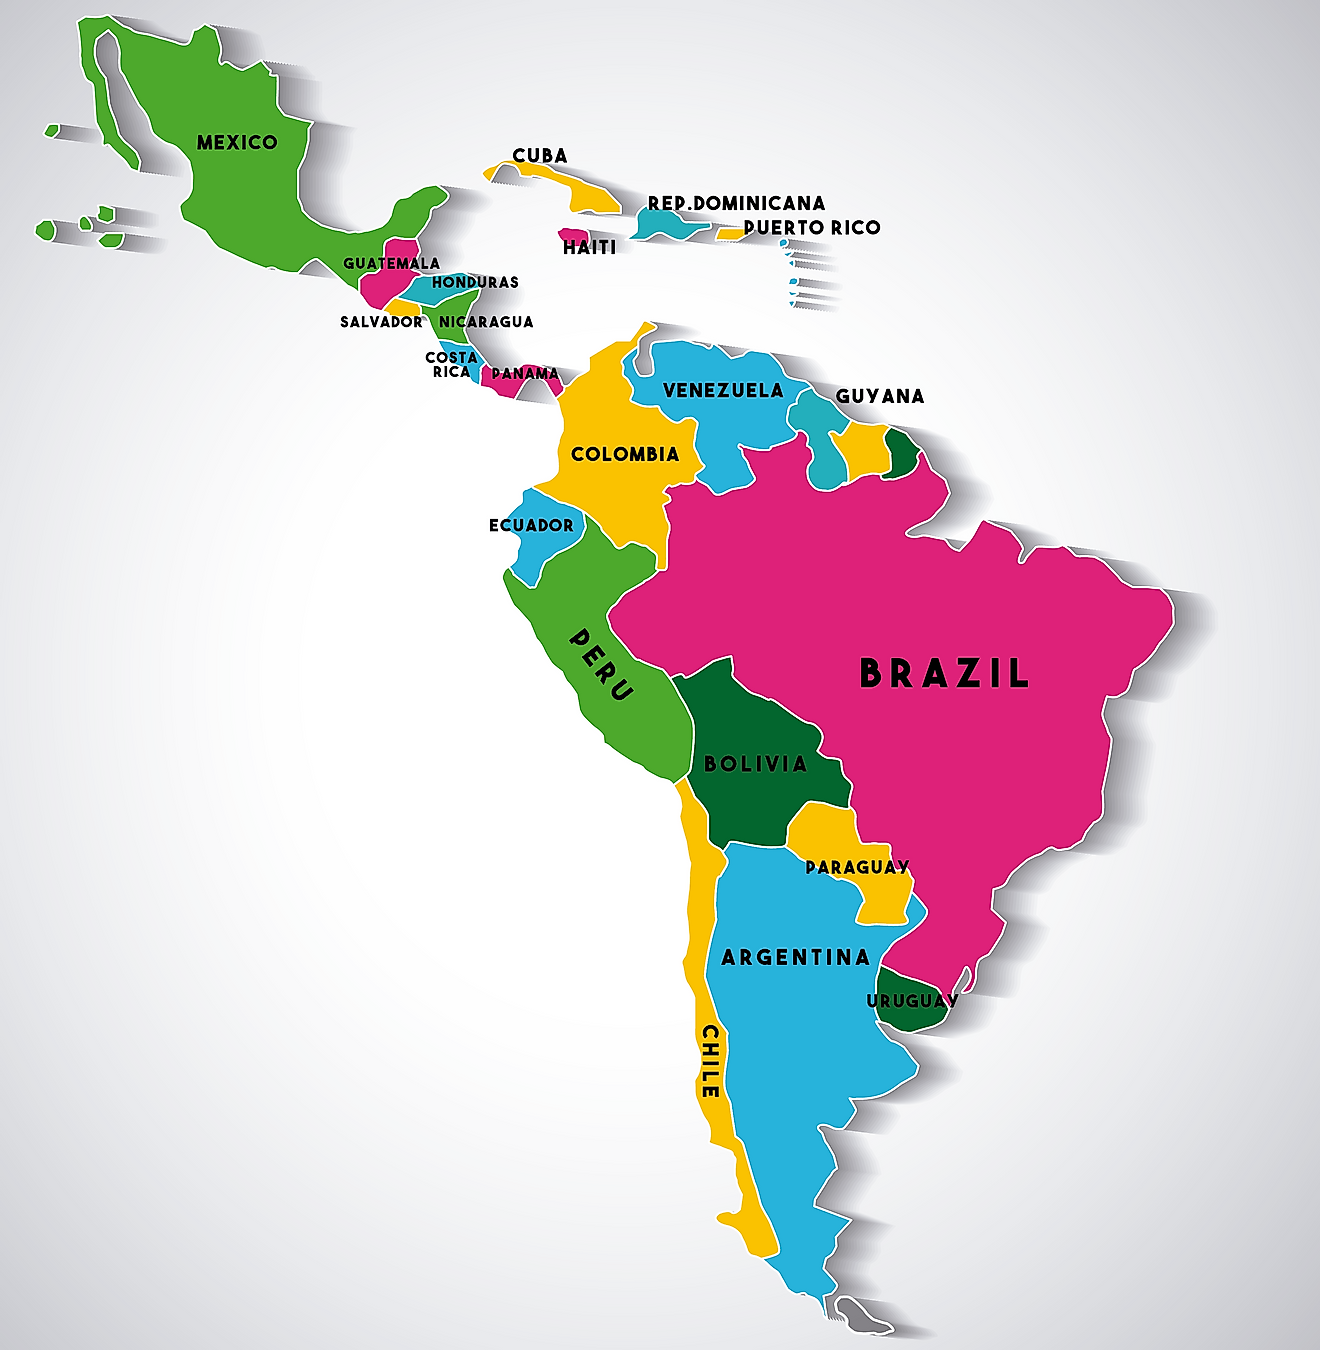 Map of Latin America